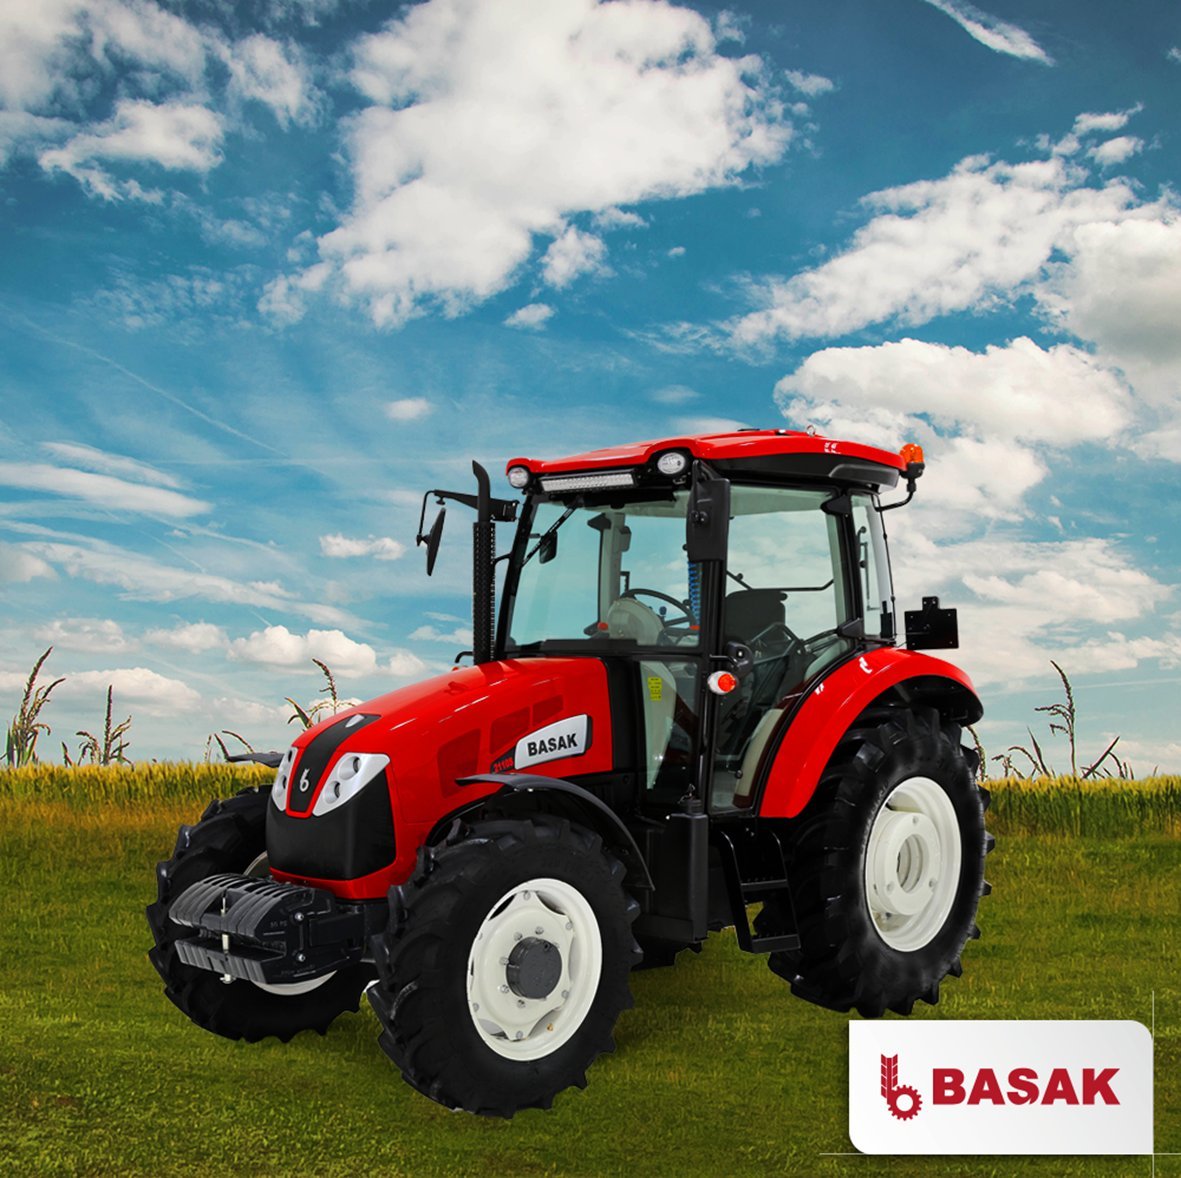 S tractor. Basak трактор. Трактор Basak 5120. Турецкий трактор Басак. Трактор Басак 2110s.